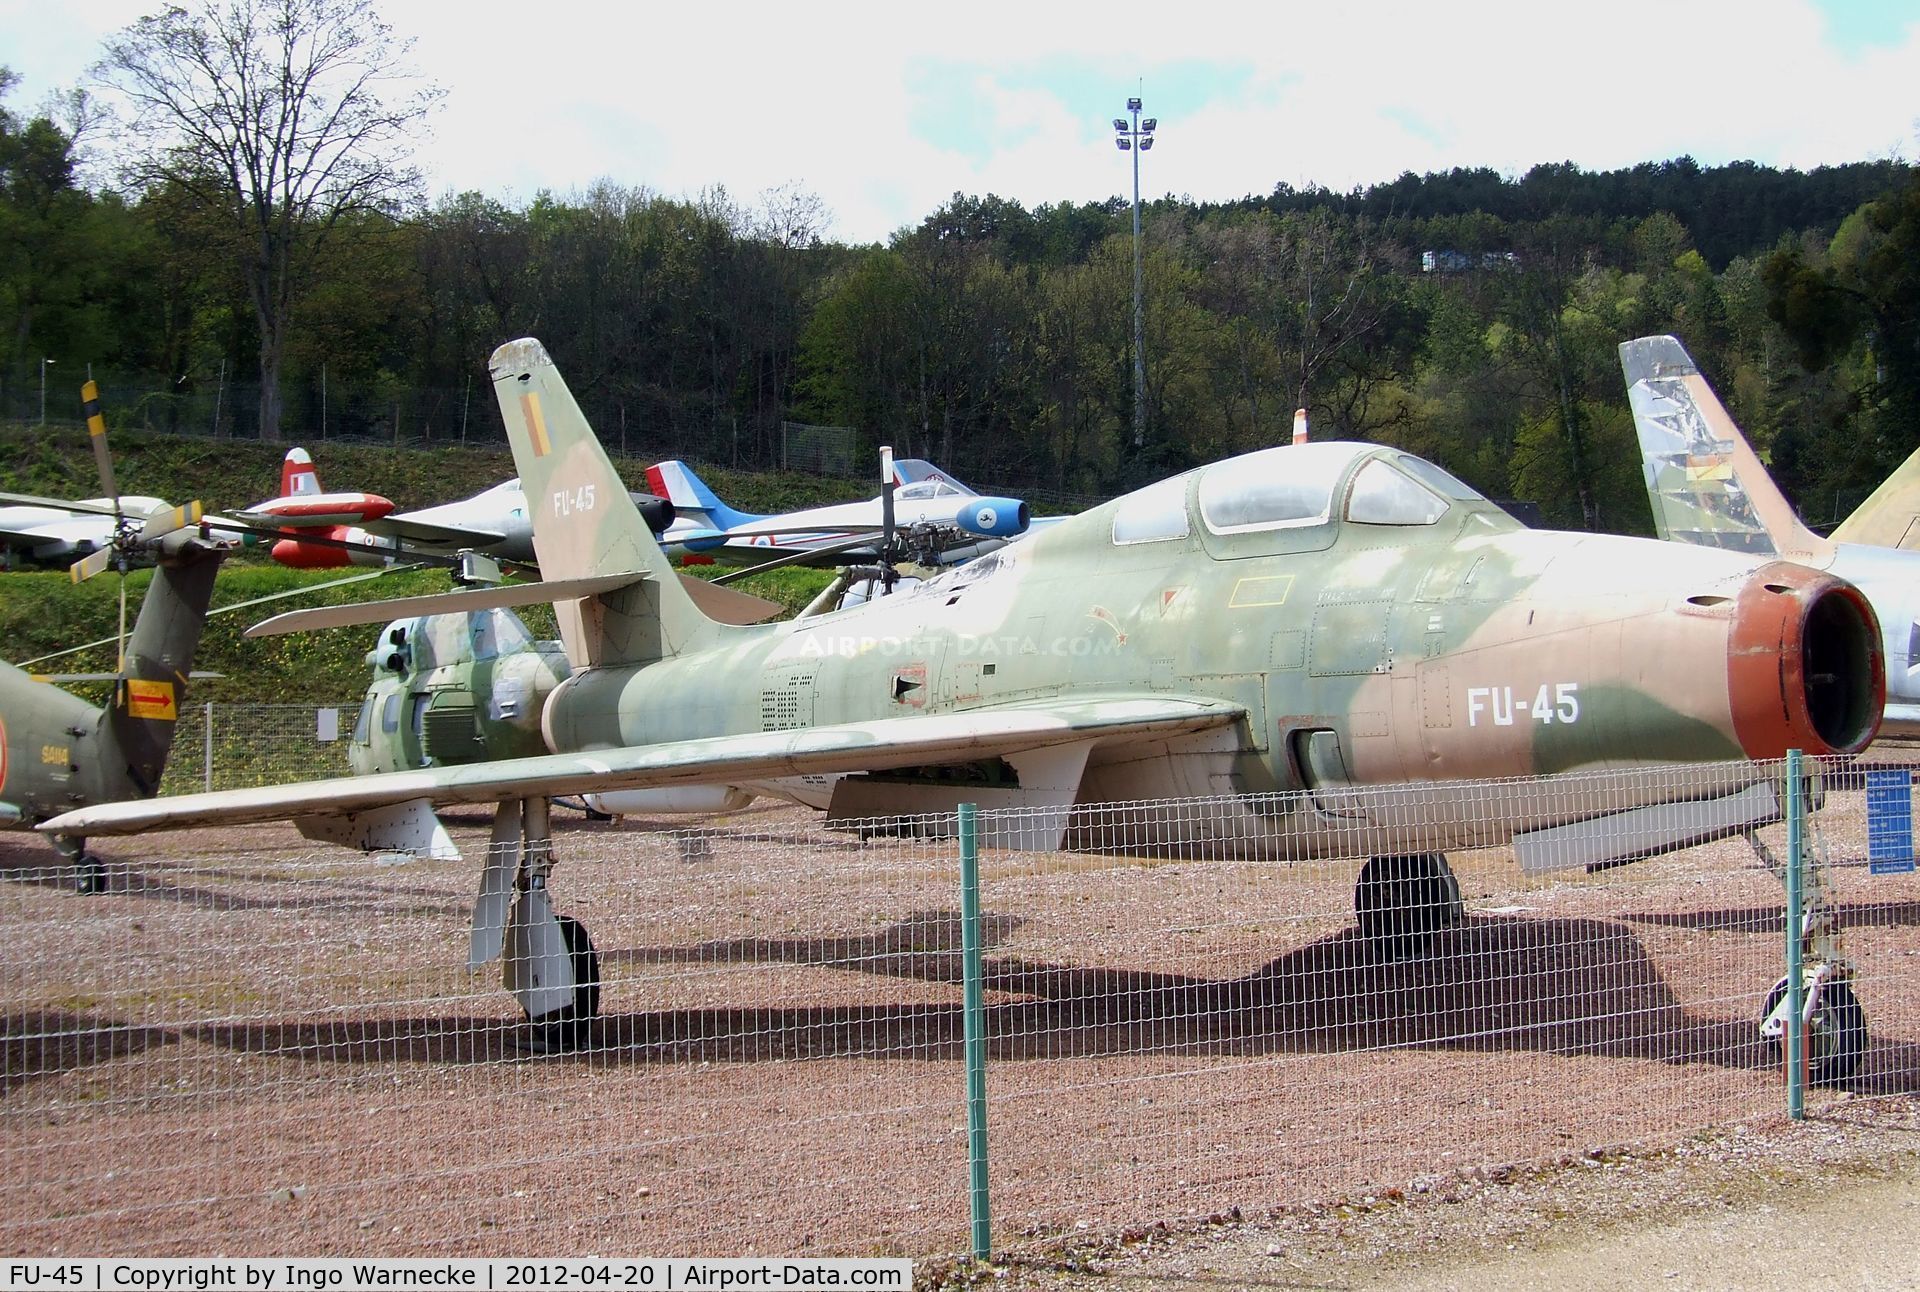 FU-45, Republic F-84F Thunderstreak C/N Not found (FU-45/52-7210), Republic F-84F Thunderstreak at the Musee de l'Aviation du Chateau, Savigny-les-Beaune